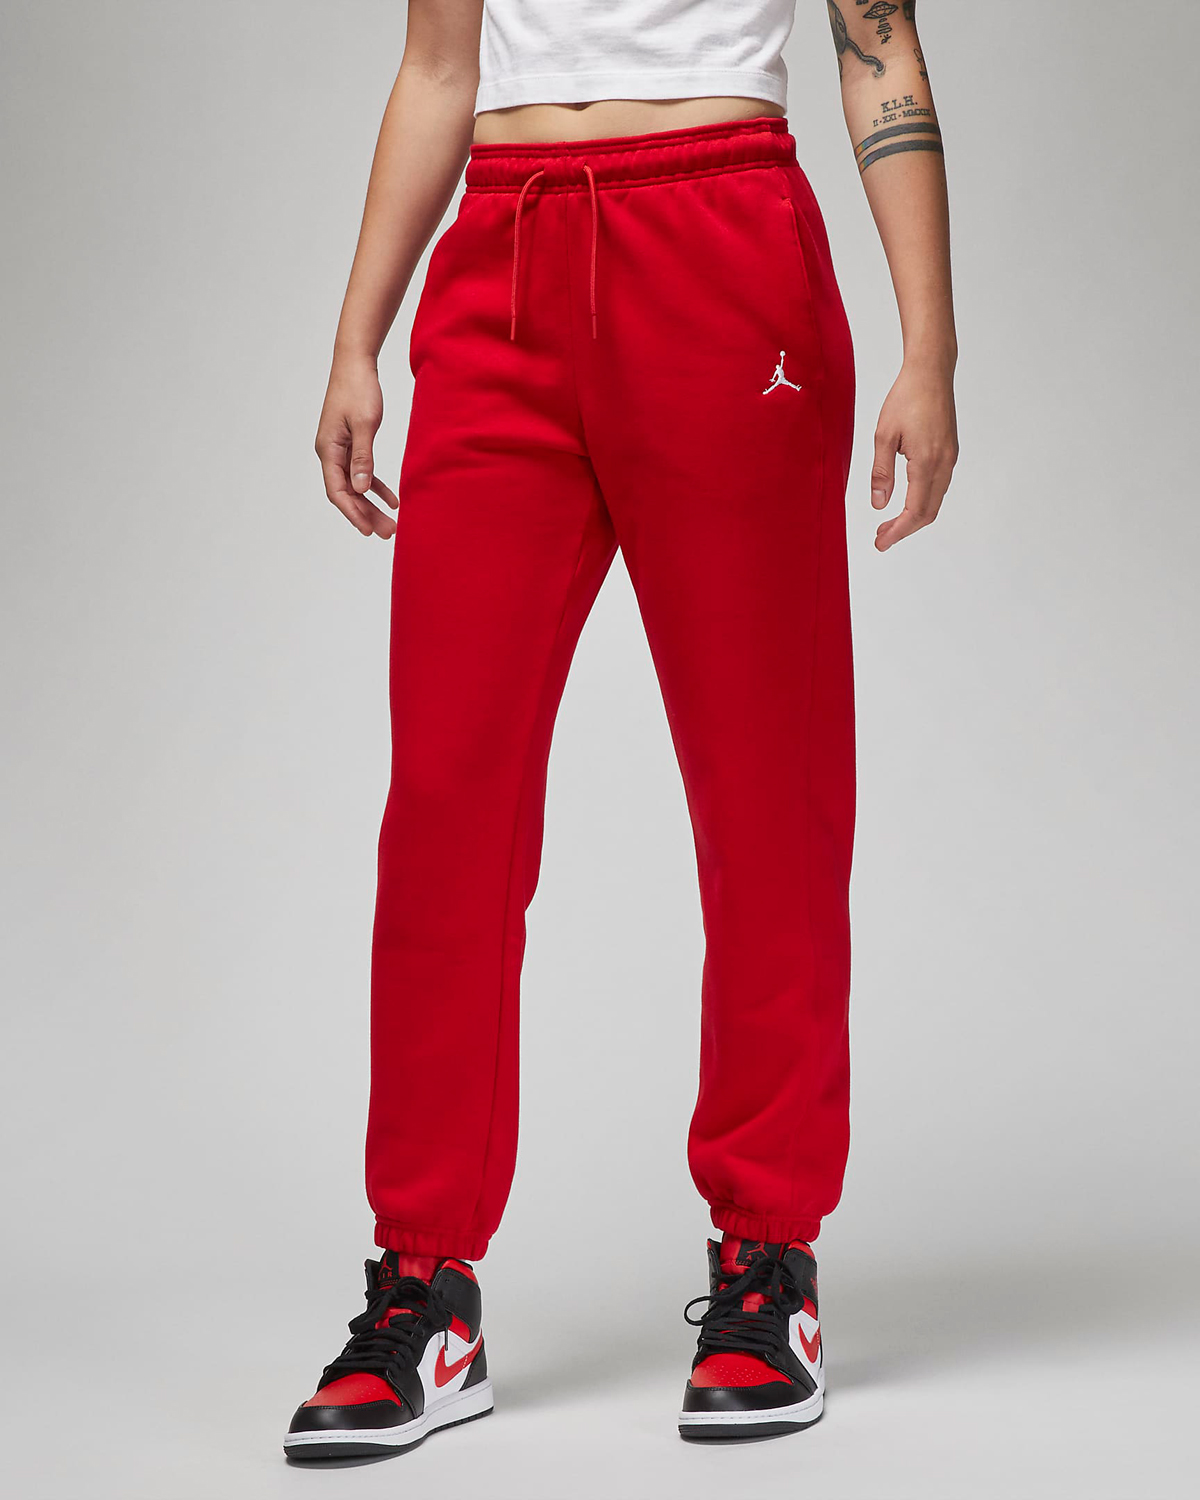 Jordan-Brooklyn-Fleece-Womens-Pants-Gym-Red